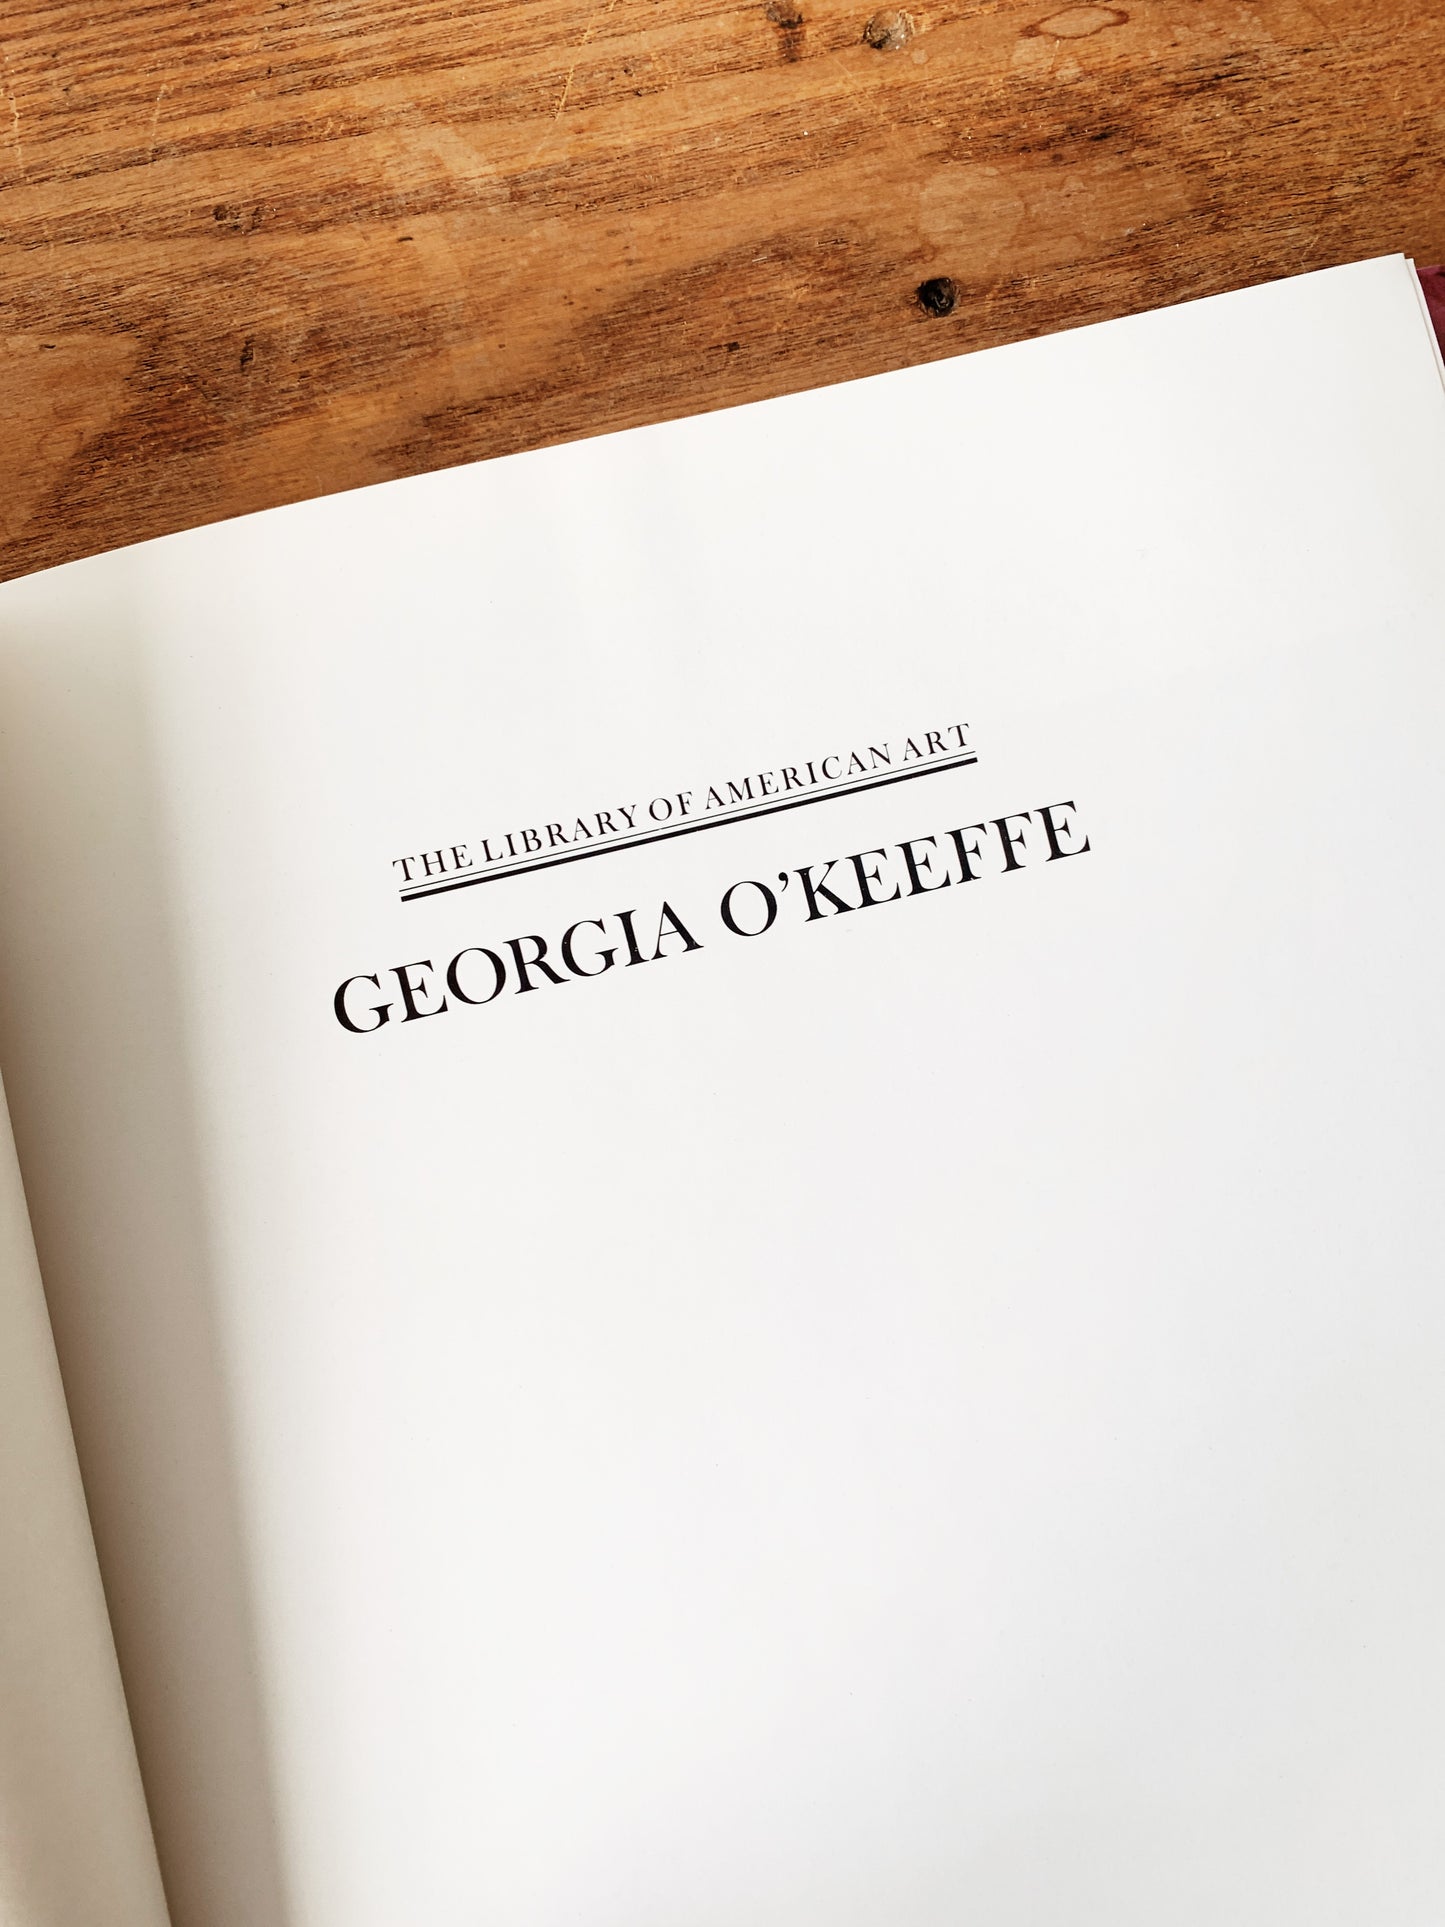 Vintage Georgia O’keeffe Hard Bound Art Book